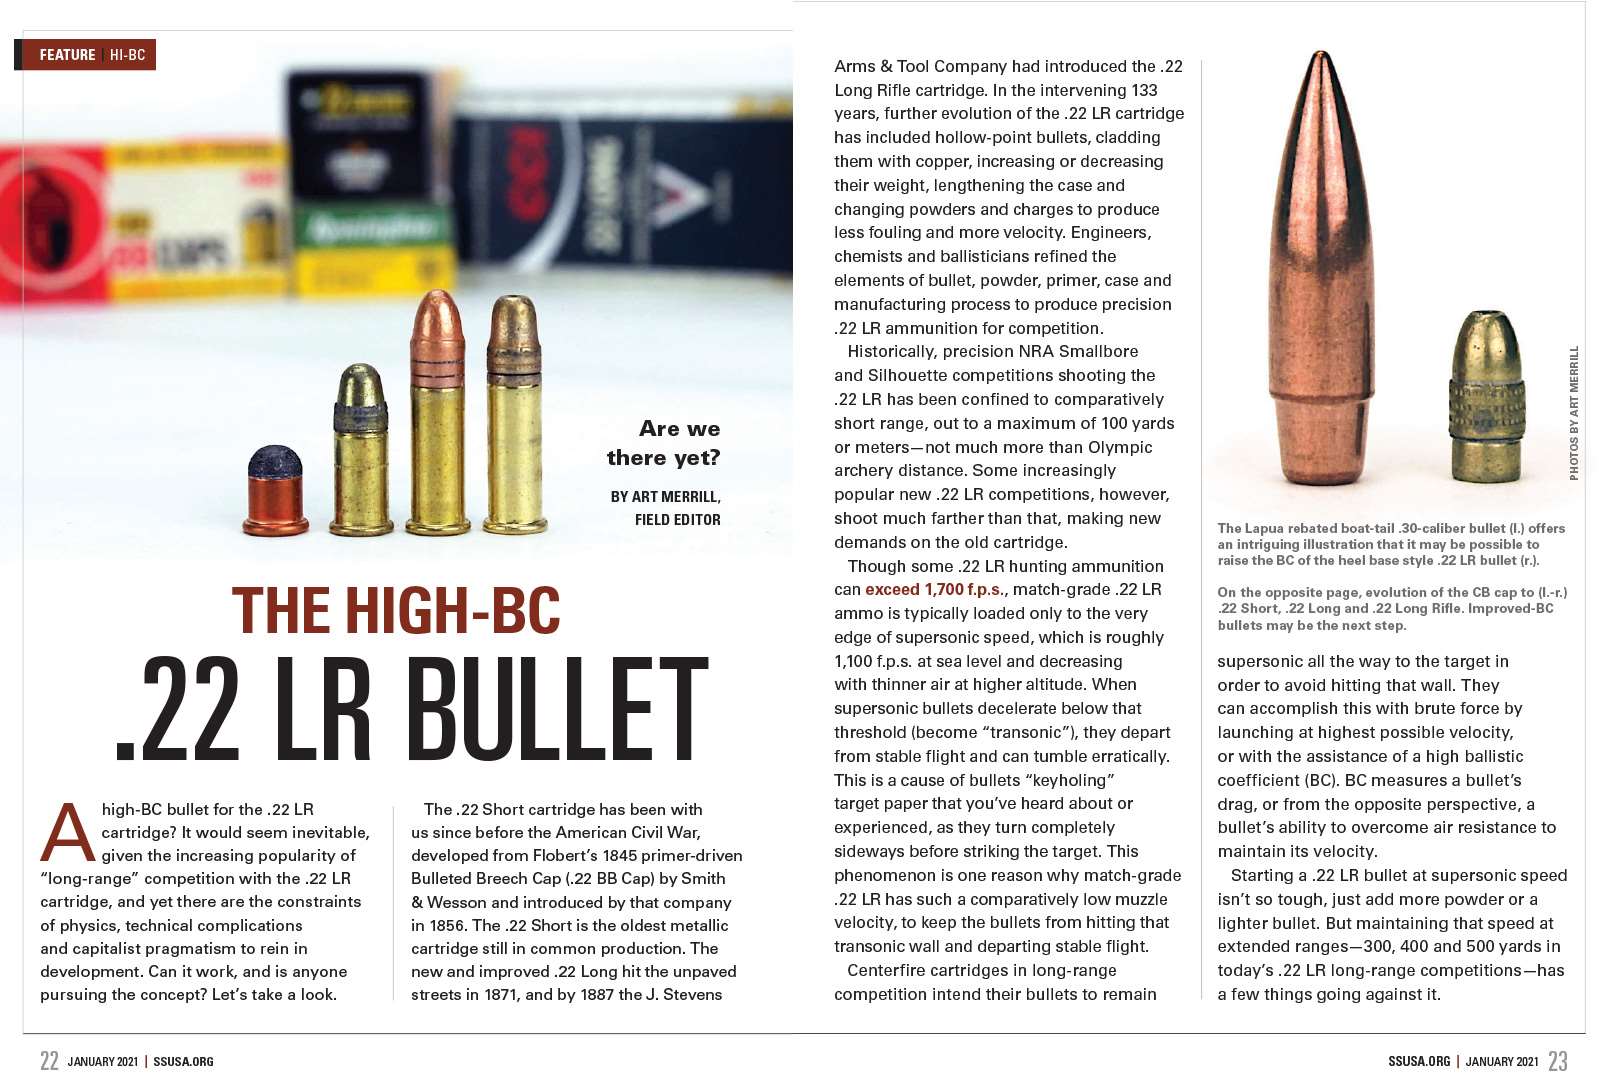 High-BC .22 LR bullets